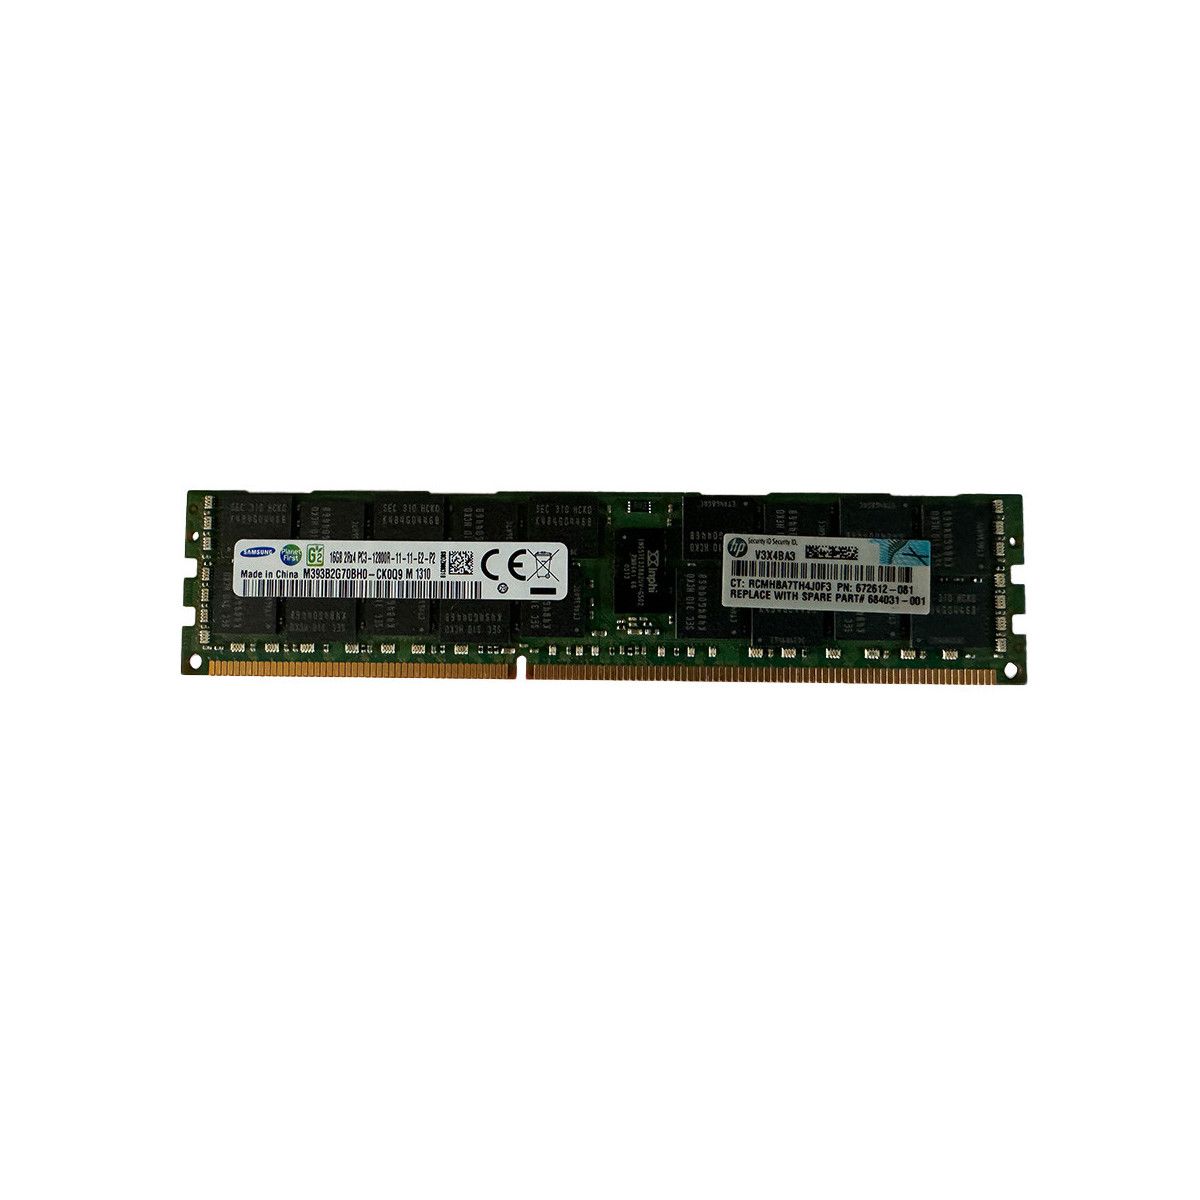 371-4658-MS - Memstar 1x 16GB DDR3-1333 RDIMM PC3L-10600R